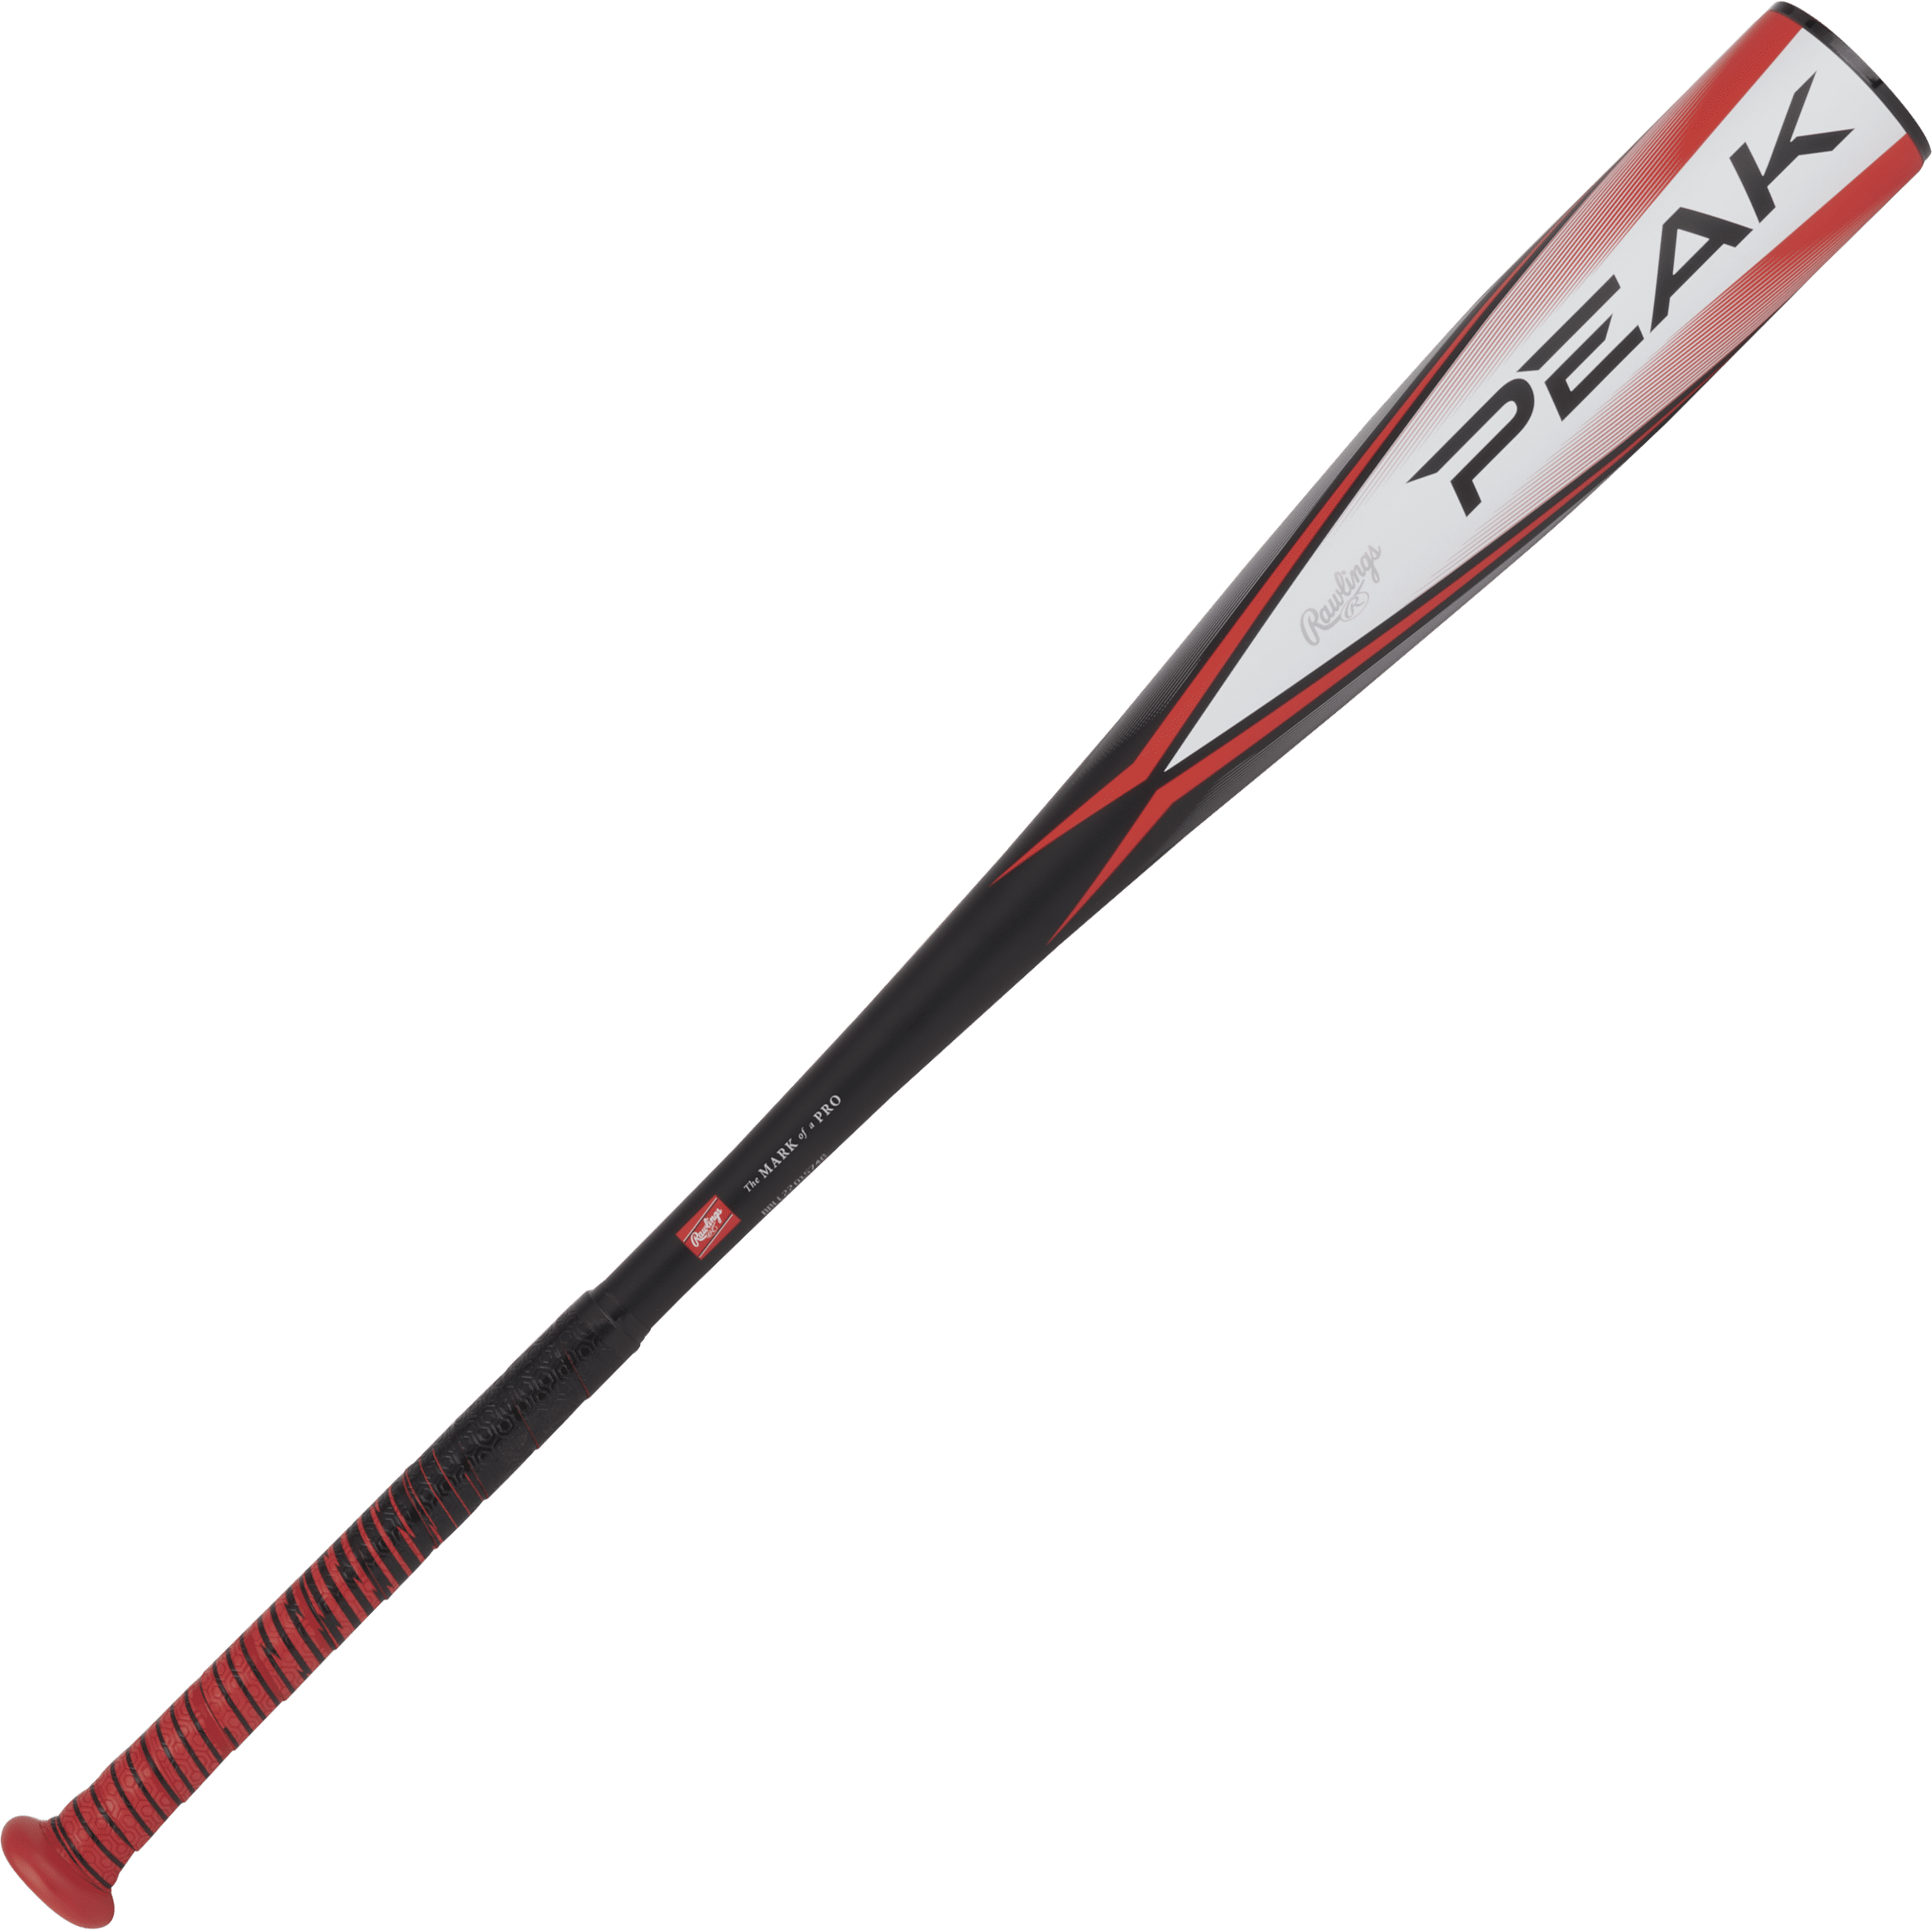 Easton 2022 Ghost Double Barrel Fastpitch Softball Bat, 33 inch -8